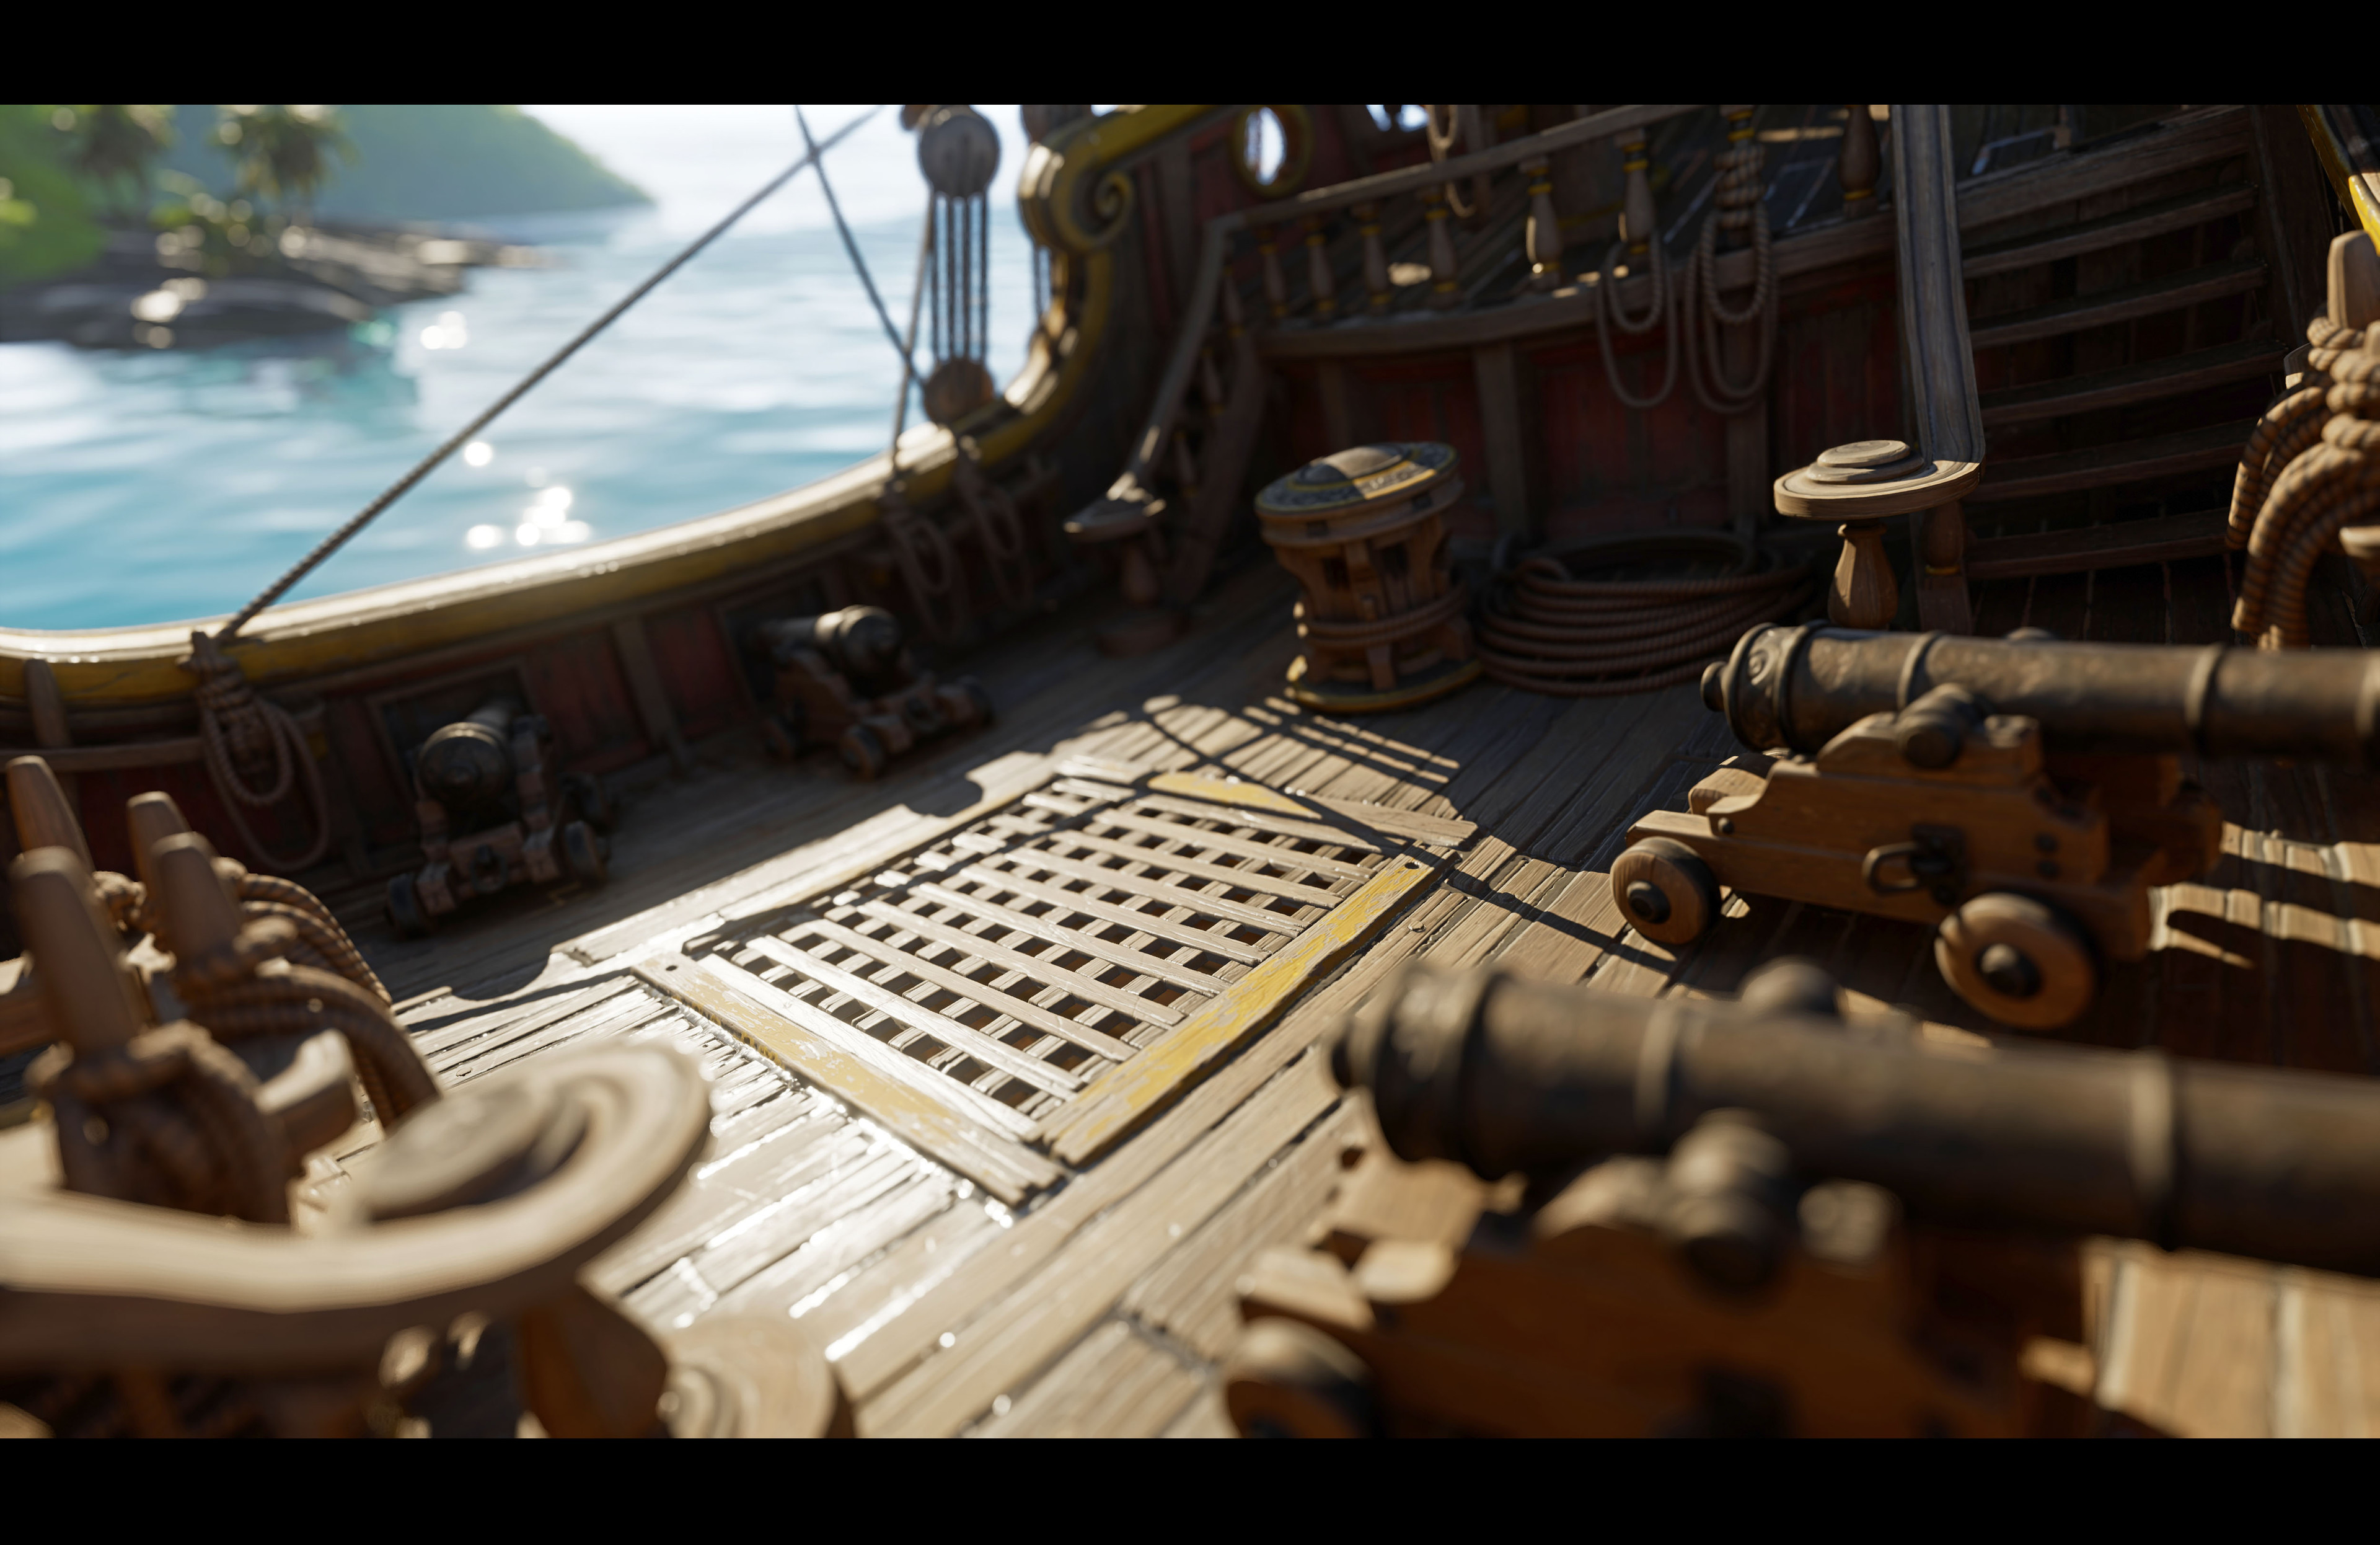 Видео палуба. Plunder Pirates. Корабль. Палуба пиратского корабля. Пиратский корабль внутри. Палуба пиратского корабля фон.